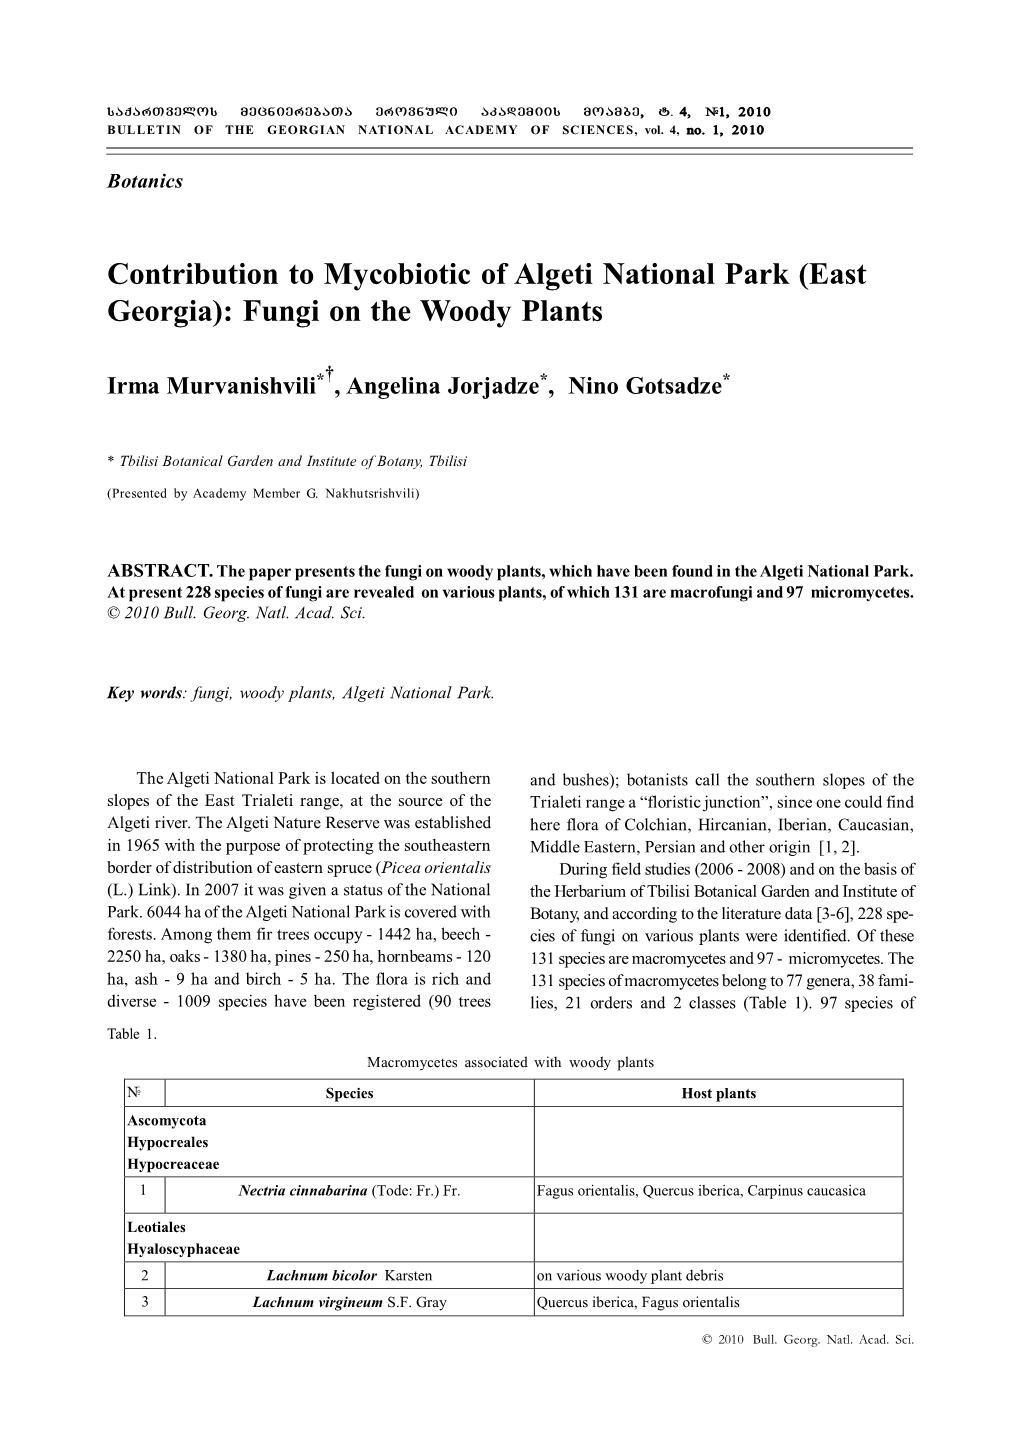 Contribution to Mycobiotic of Algeti National Park (East Georgia): Fungi on the Woody Plants